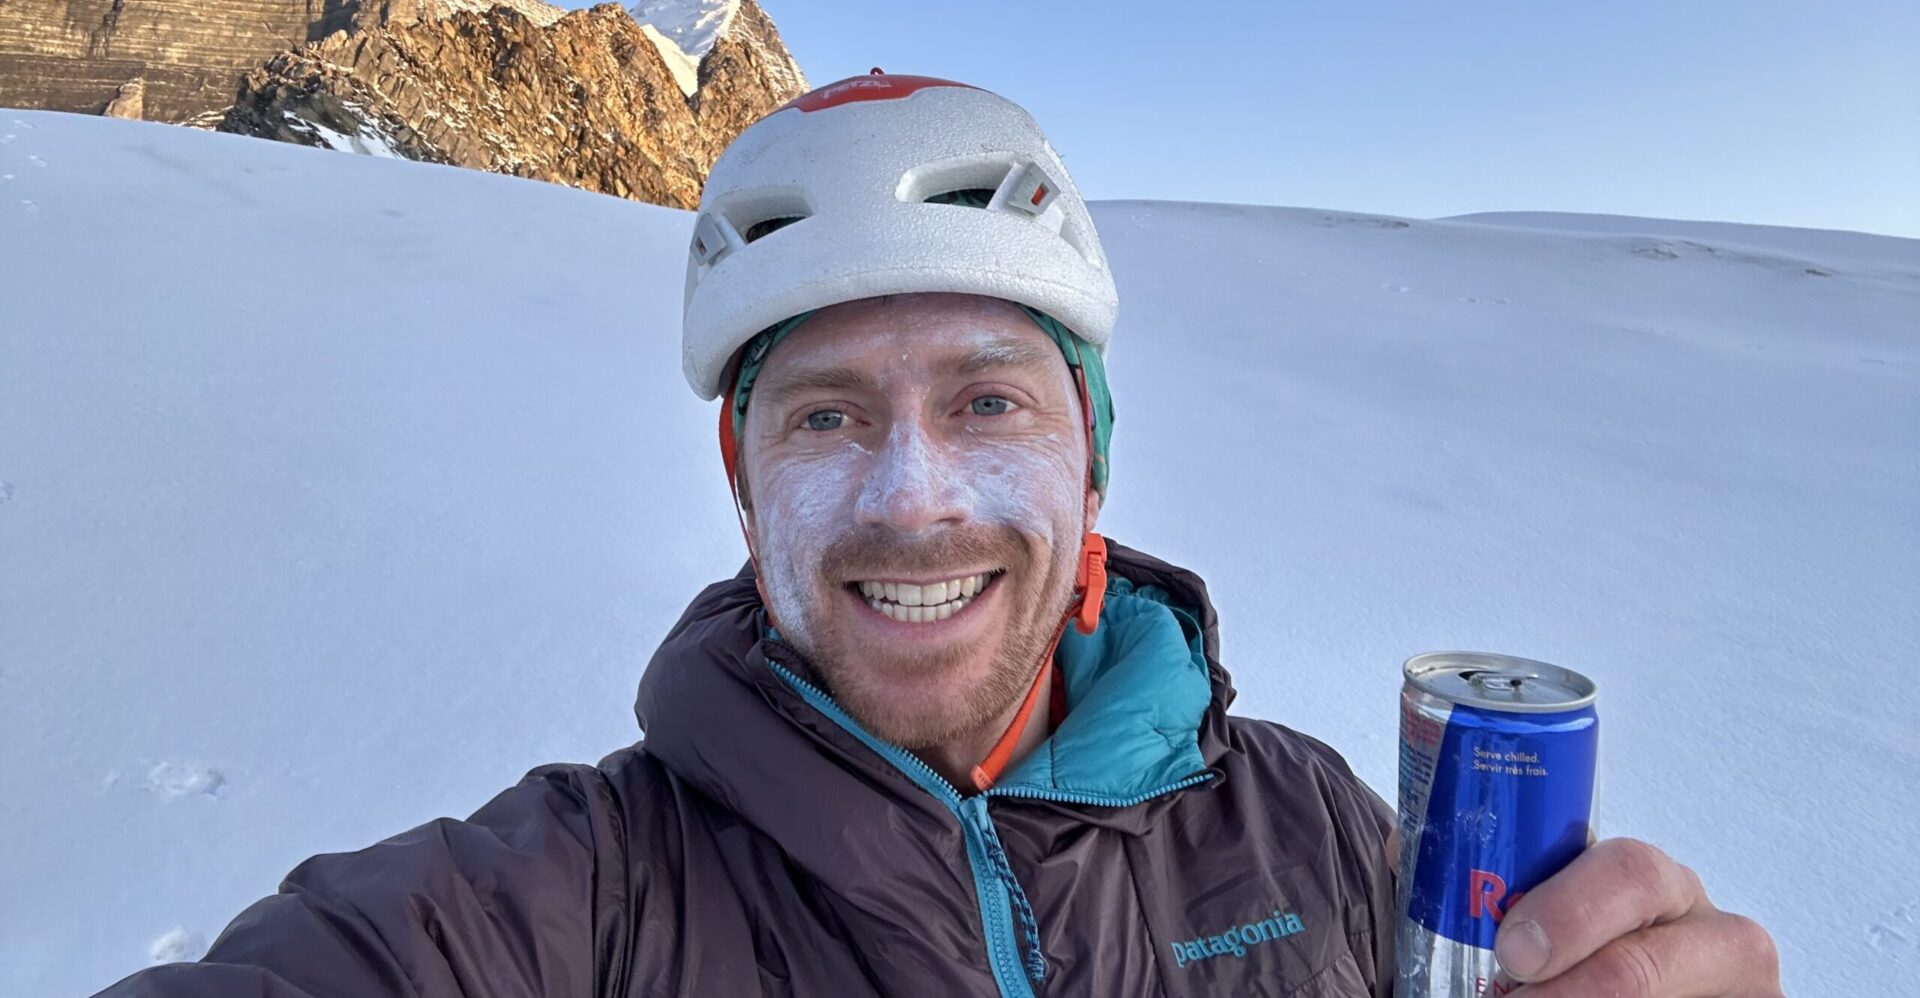 Caffeine as an ergogenic aid in mountain sports - Leif Godberson on Mount Robson